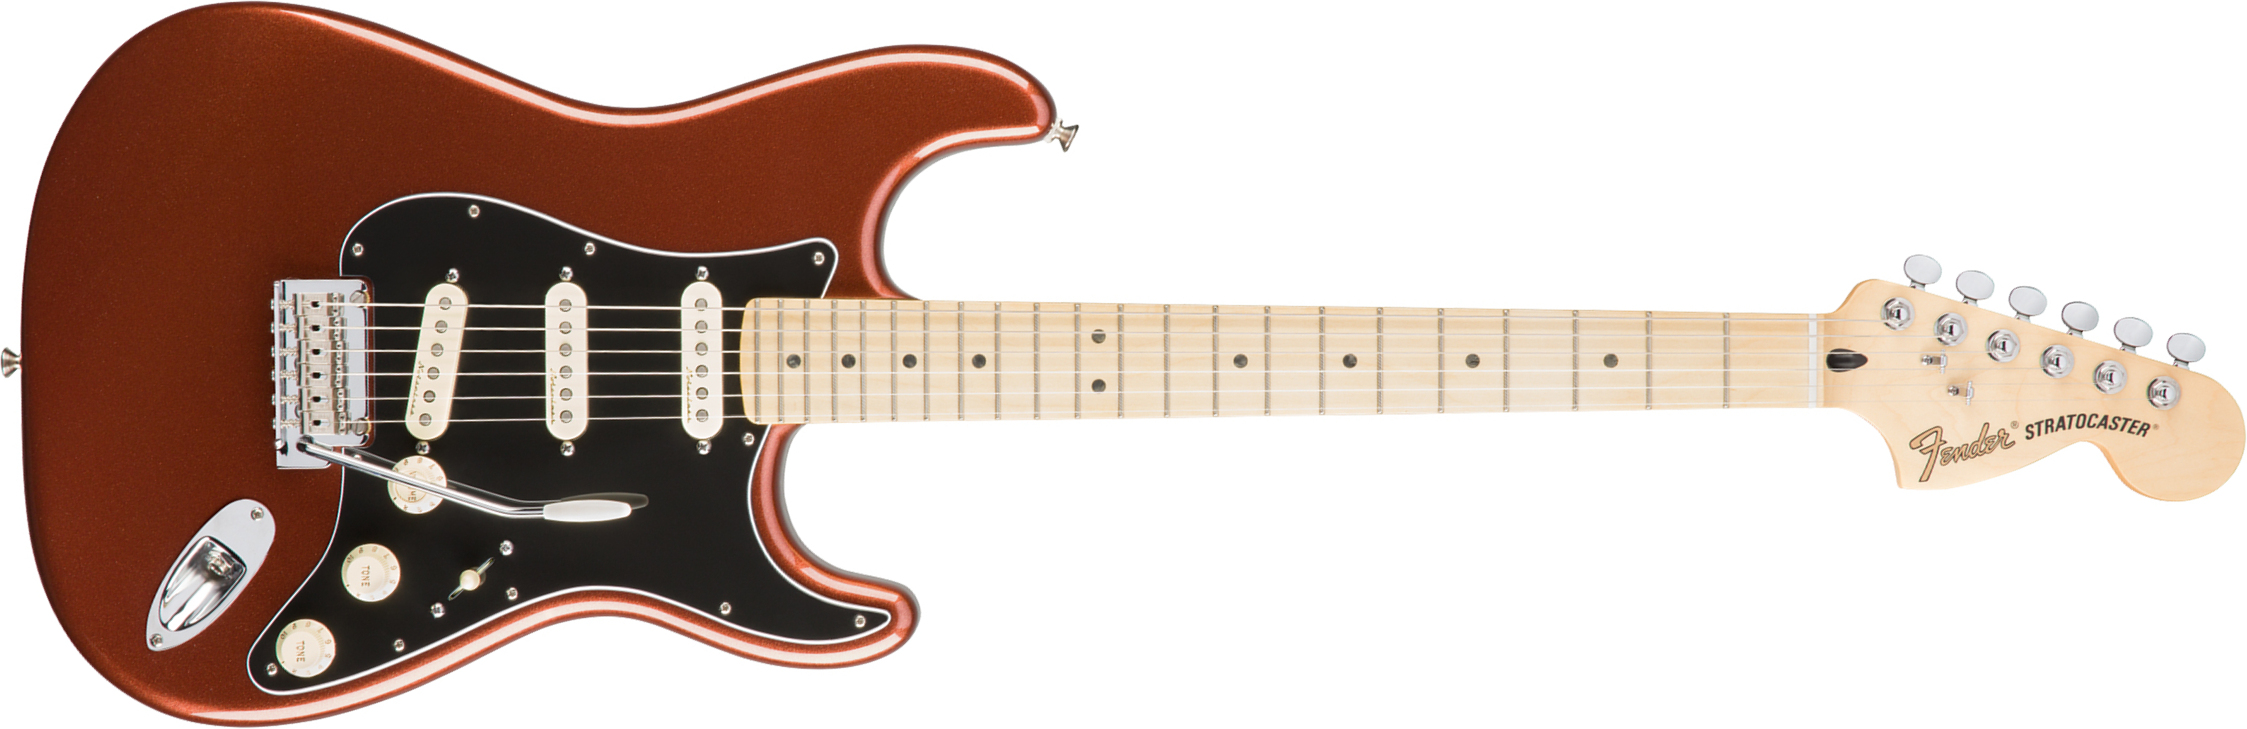 Fender Strat Deluxe Roadhouse Mex Mn - Classic Copper - Elektrische gitaar in Str-vorm - Main picture